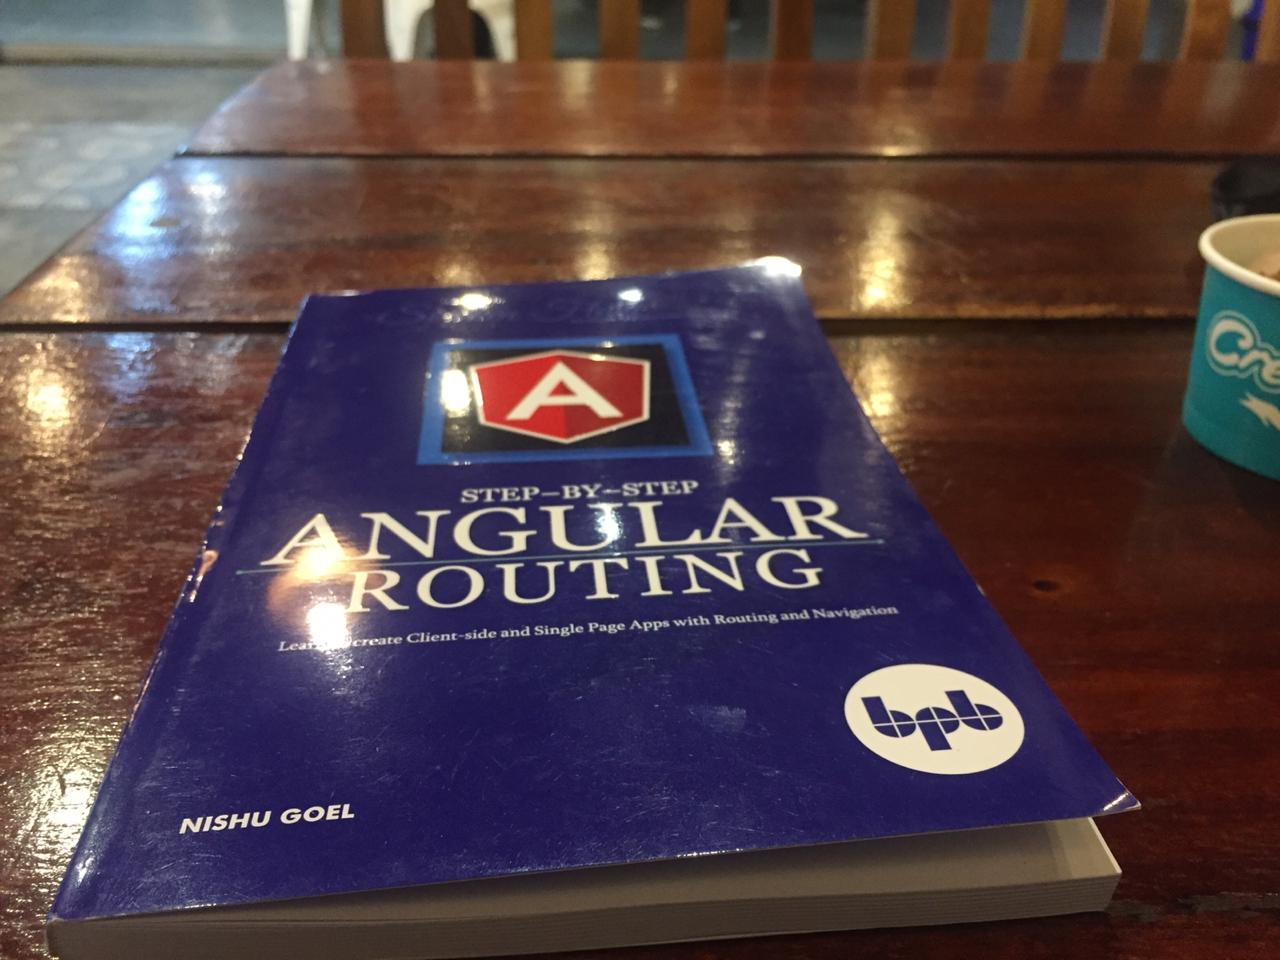 Książka Angular Routing na tabeli.